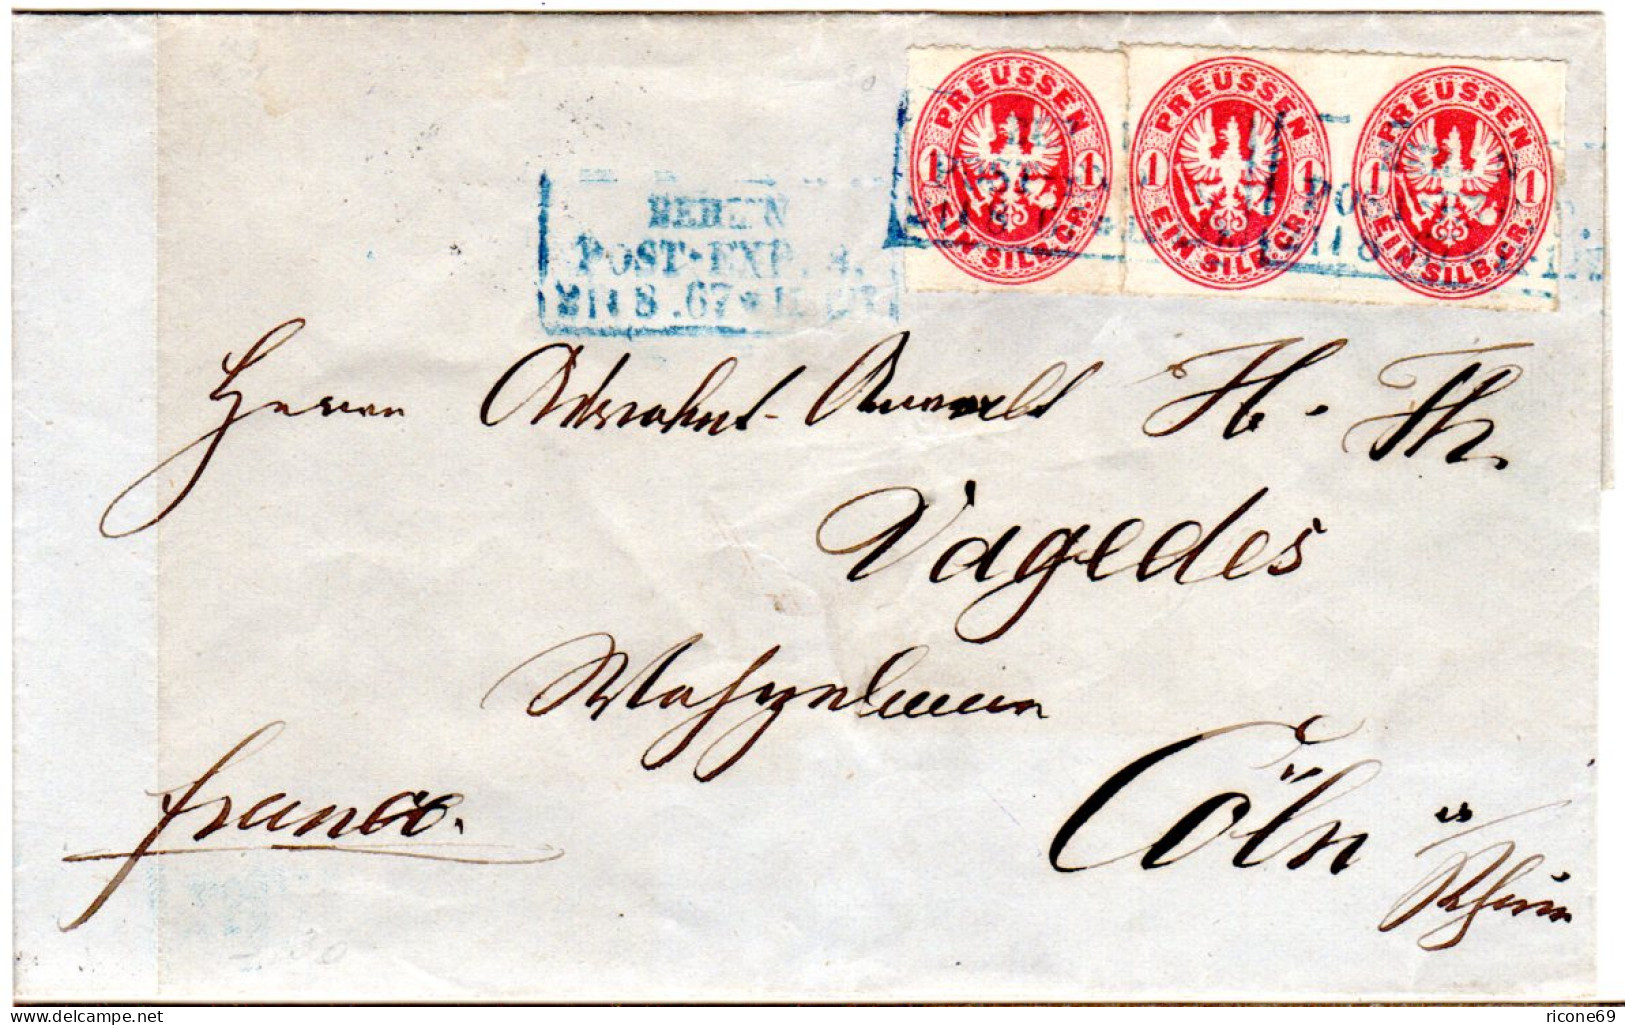 Preussen 1867, 3x1 Sgr. Auf Brief M. Blauem R 3 Berlin Post-Exp. 8 N. Köln. - Lettres & Documents